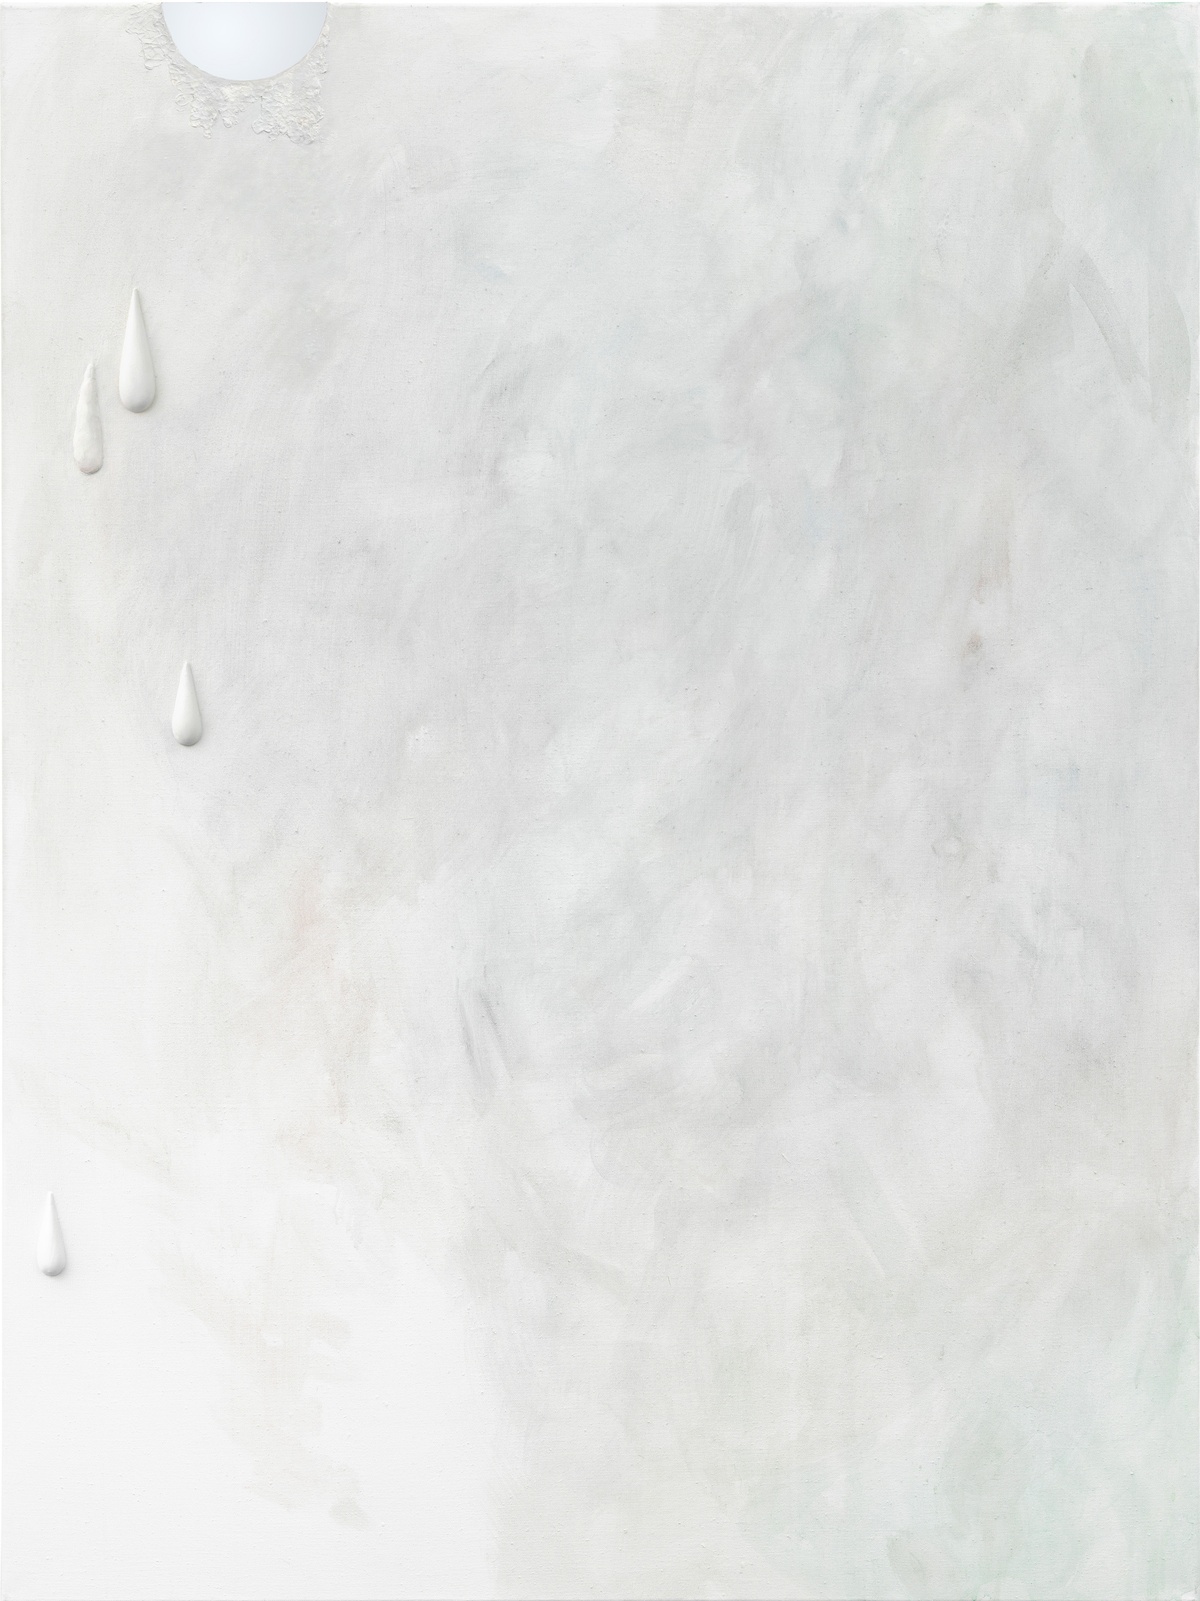 Untitled, 2017. metalpigment, mineral pigments, acrylic, rigid foam on canvas. 180 x 135 cm